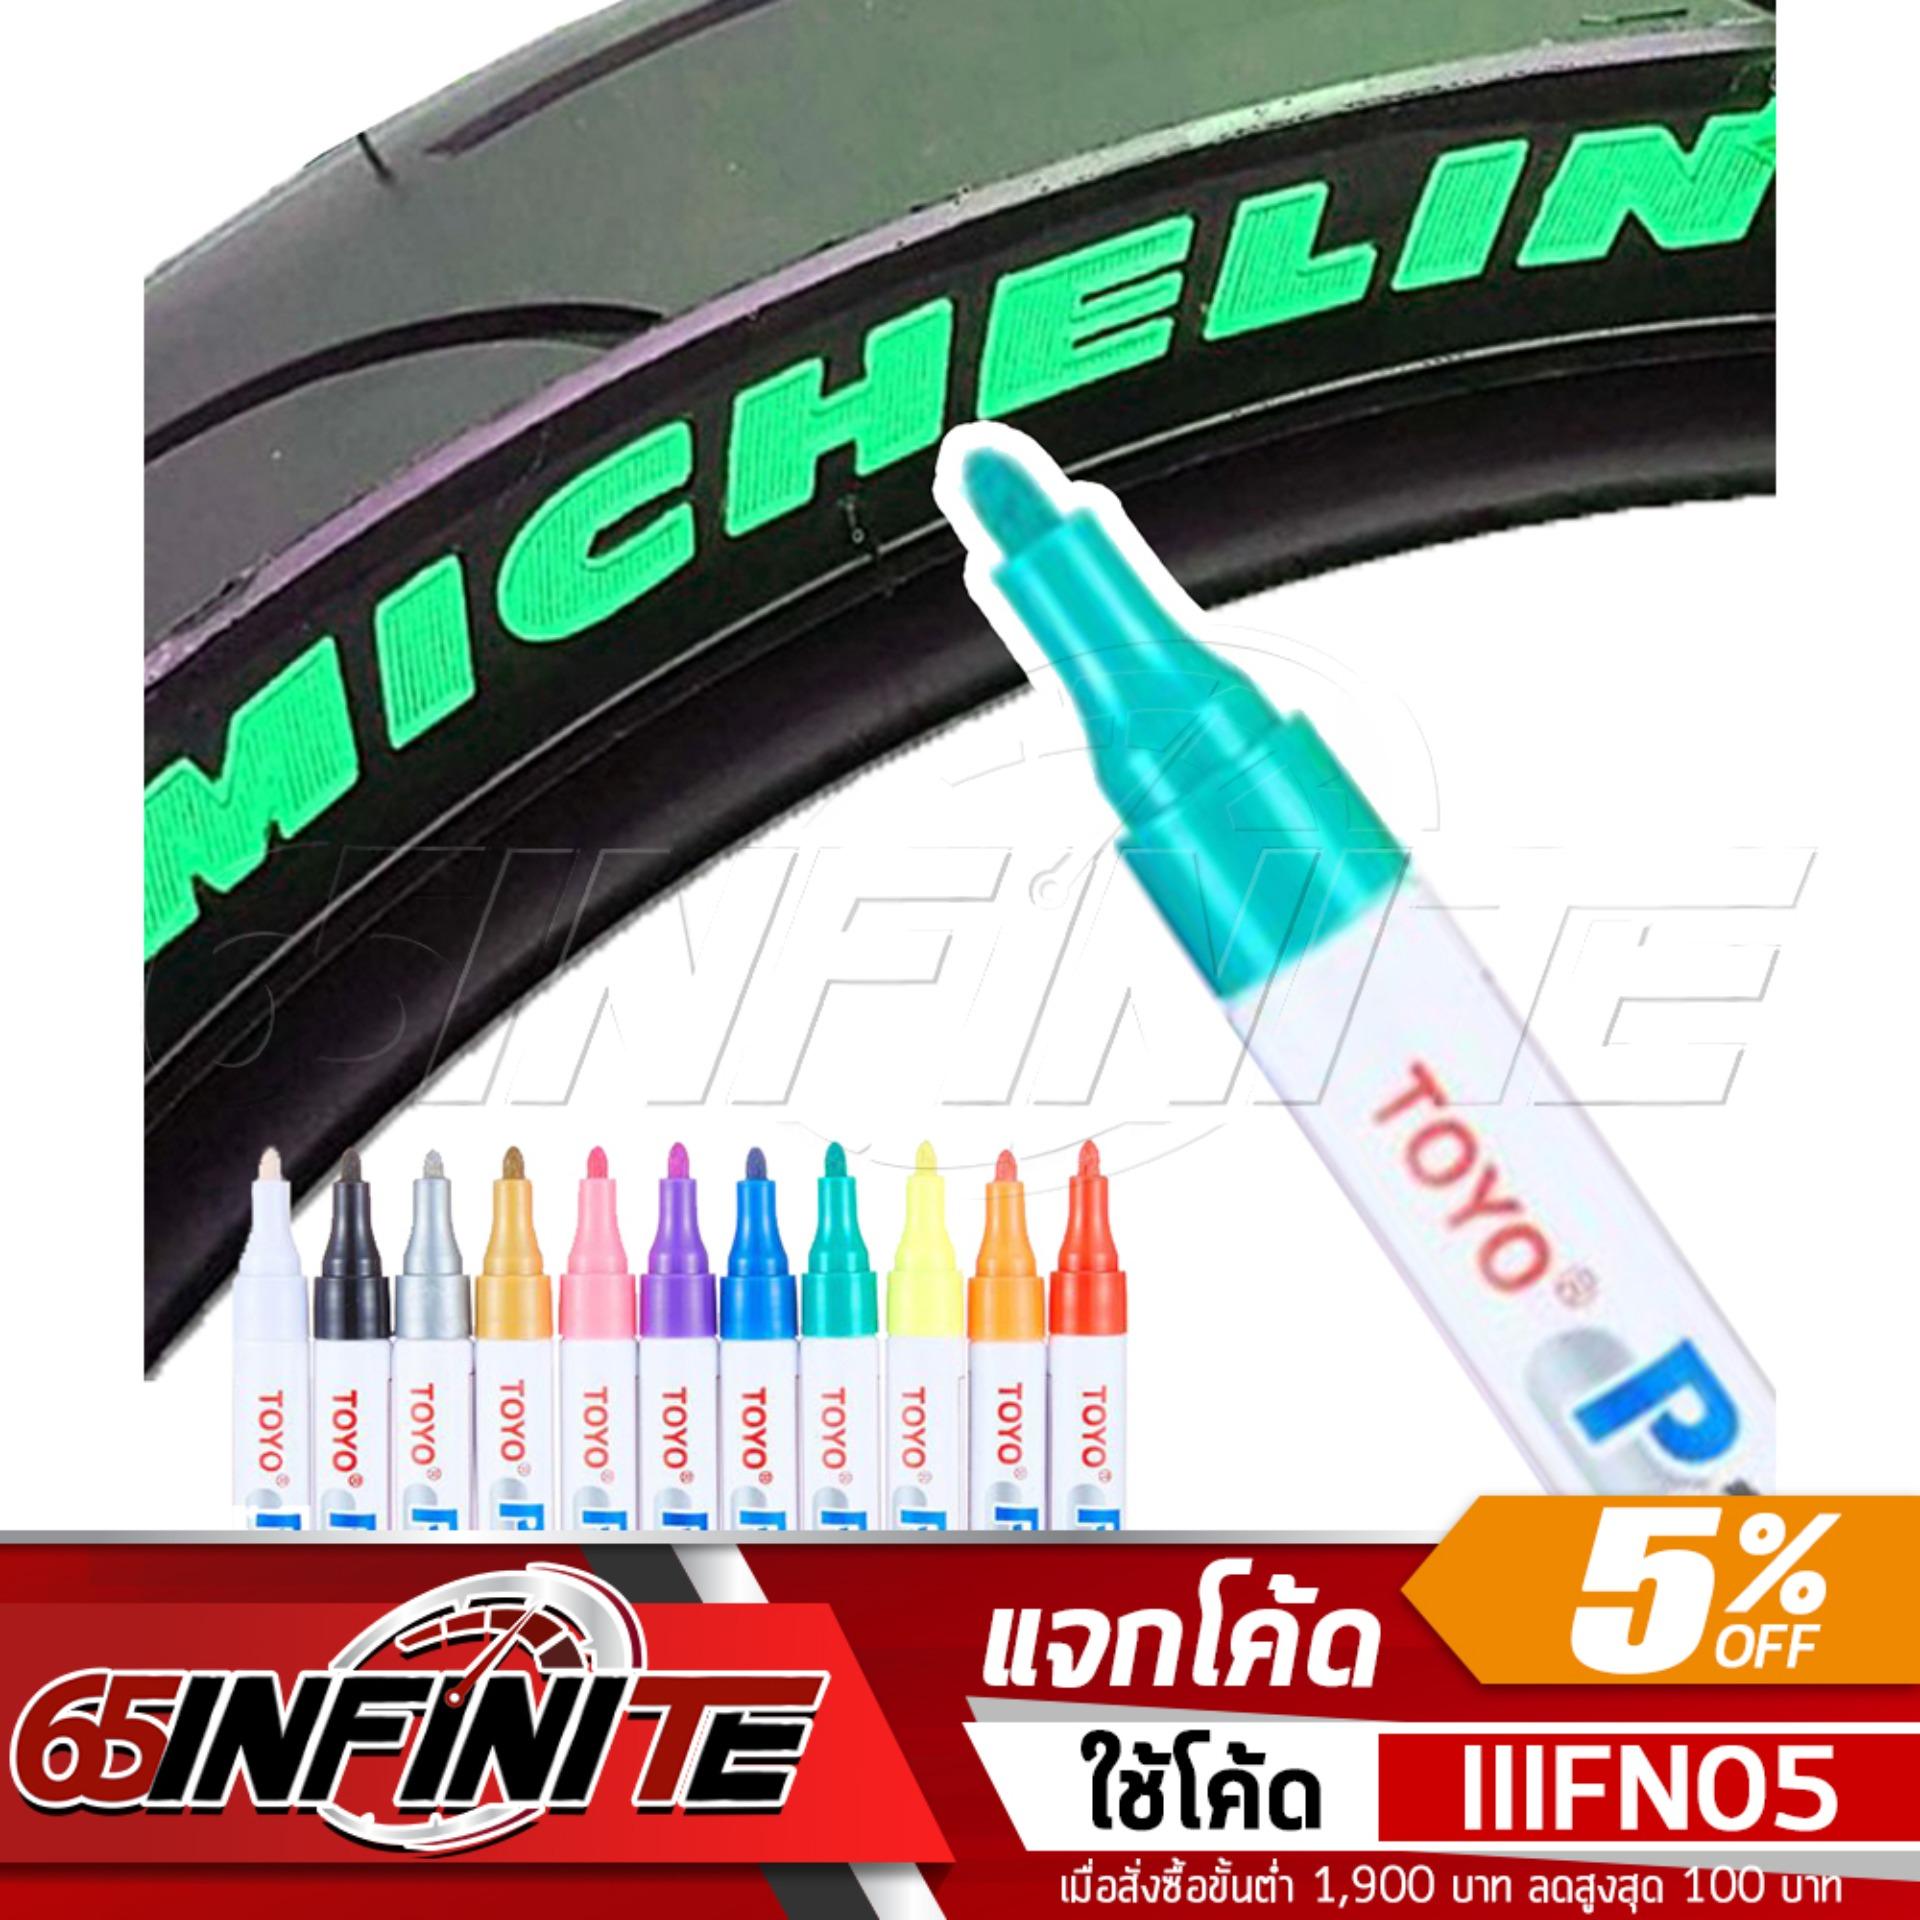 65Infinte TOYO Paint (สีเขียว) ปากกาเขียนยาง ปากกาเขียนล้อ แต้มแม็กซ์ ยางรถยนต์ ล้อรถยนต์ ของแท้จากญี่ปุ่น 100%